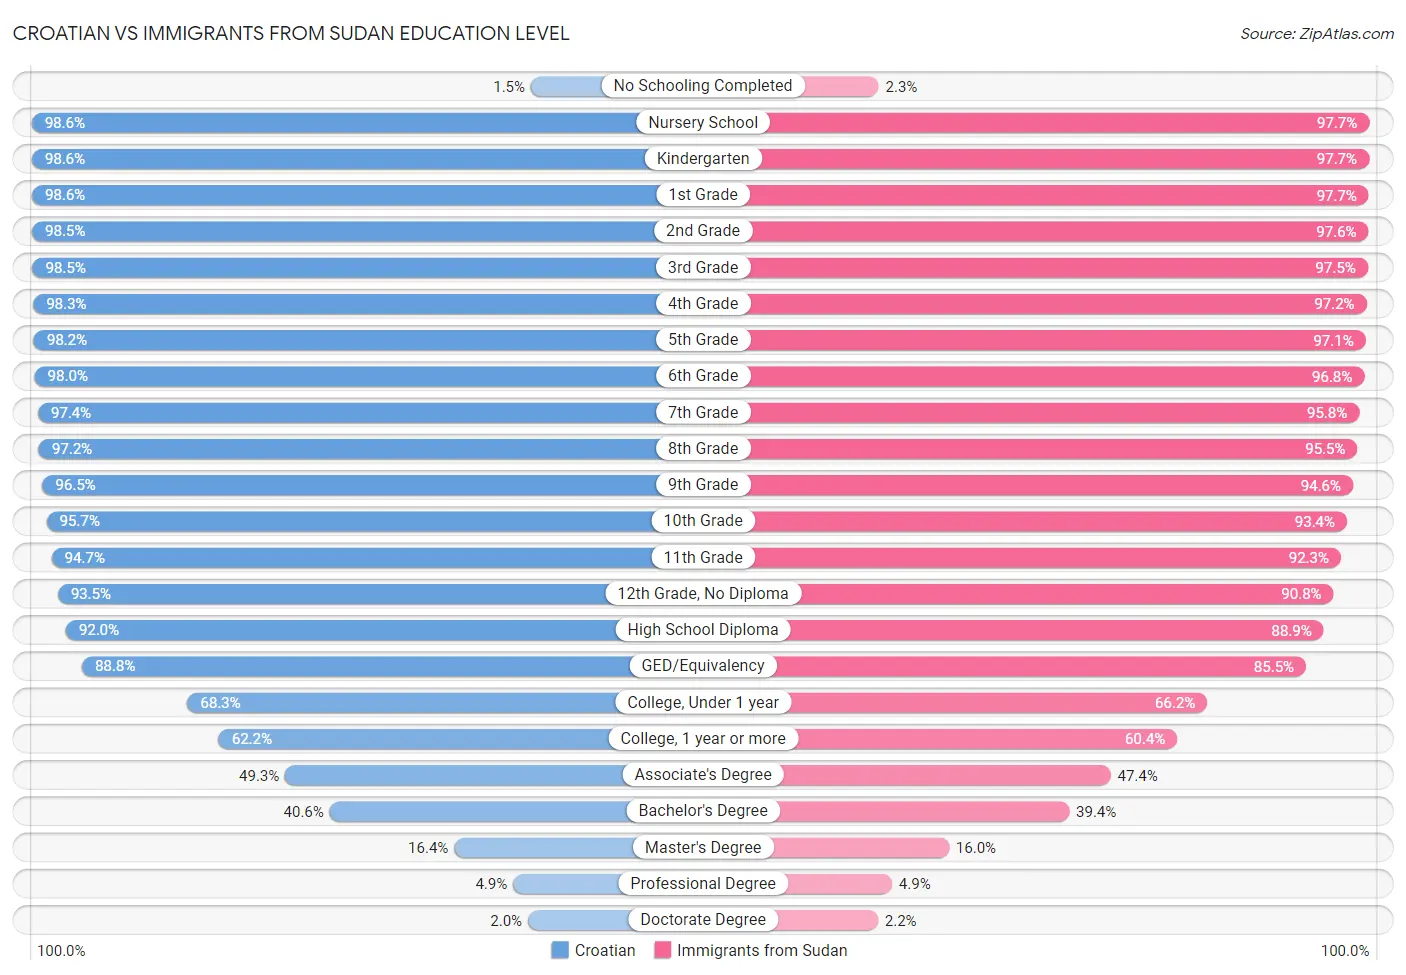 Croatian vs Immigrants from Sudan Education Level